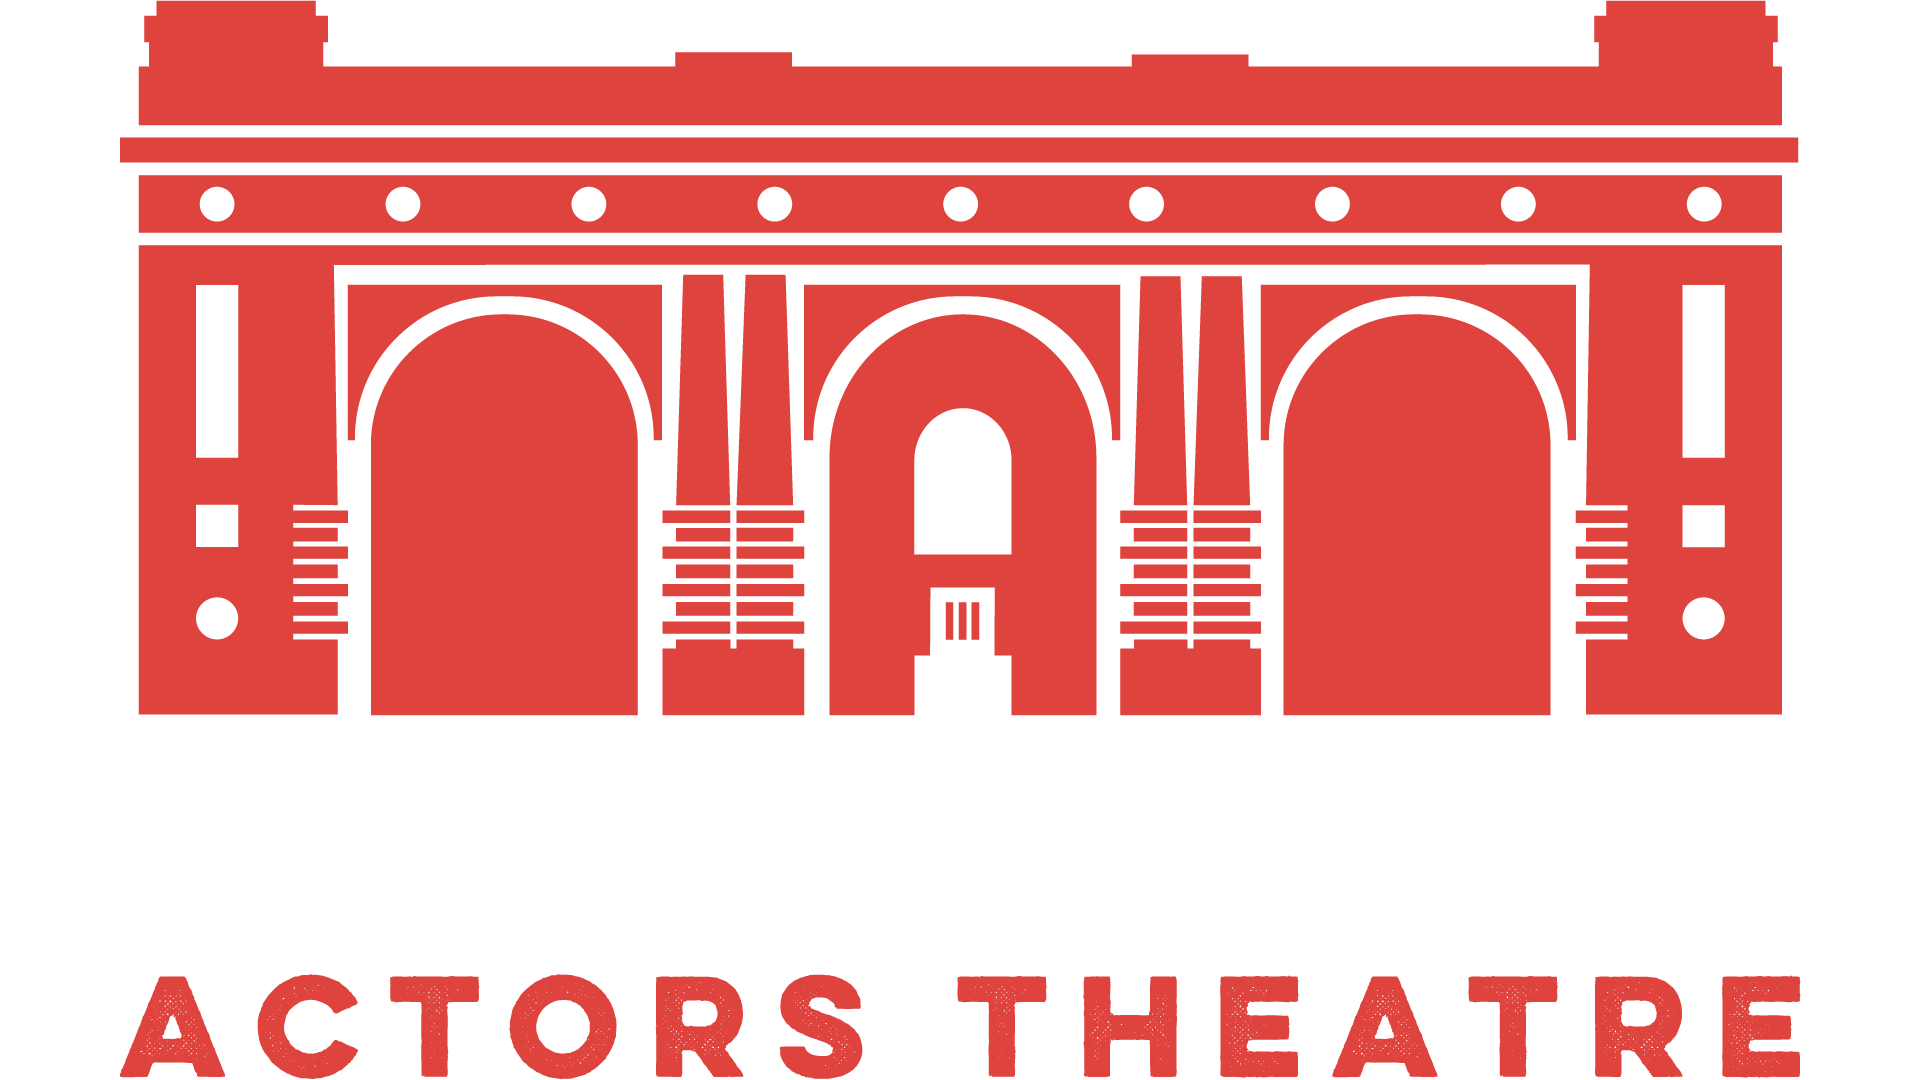 Kansas City Actors Theatre